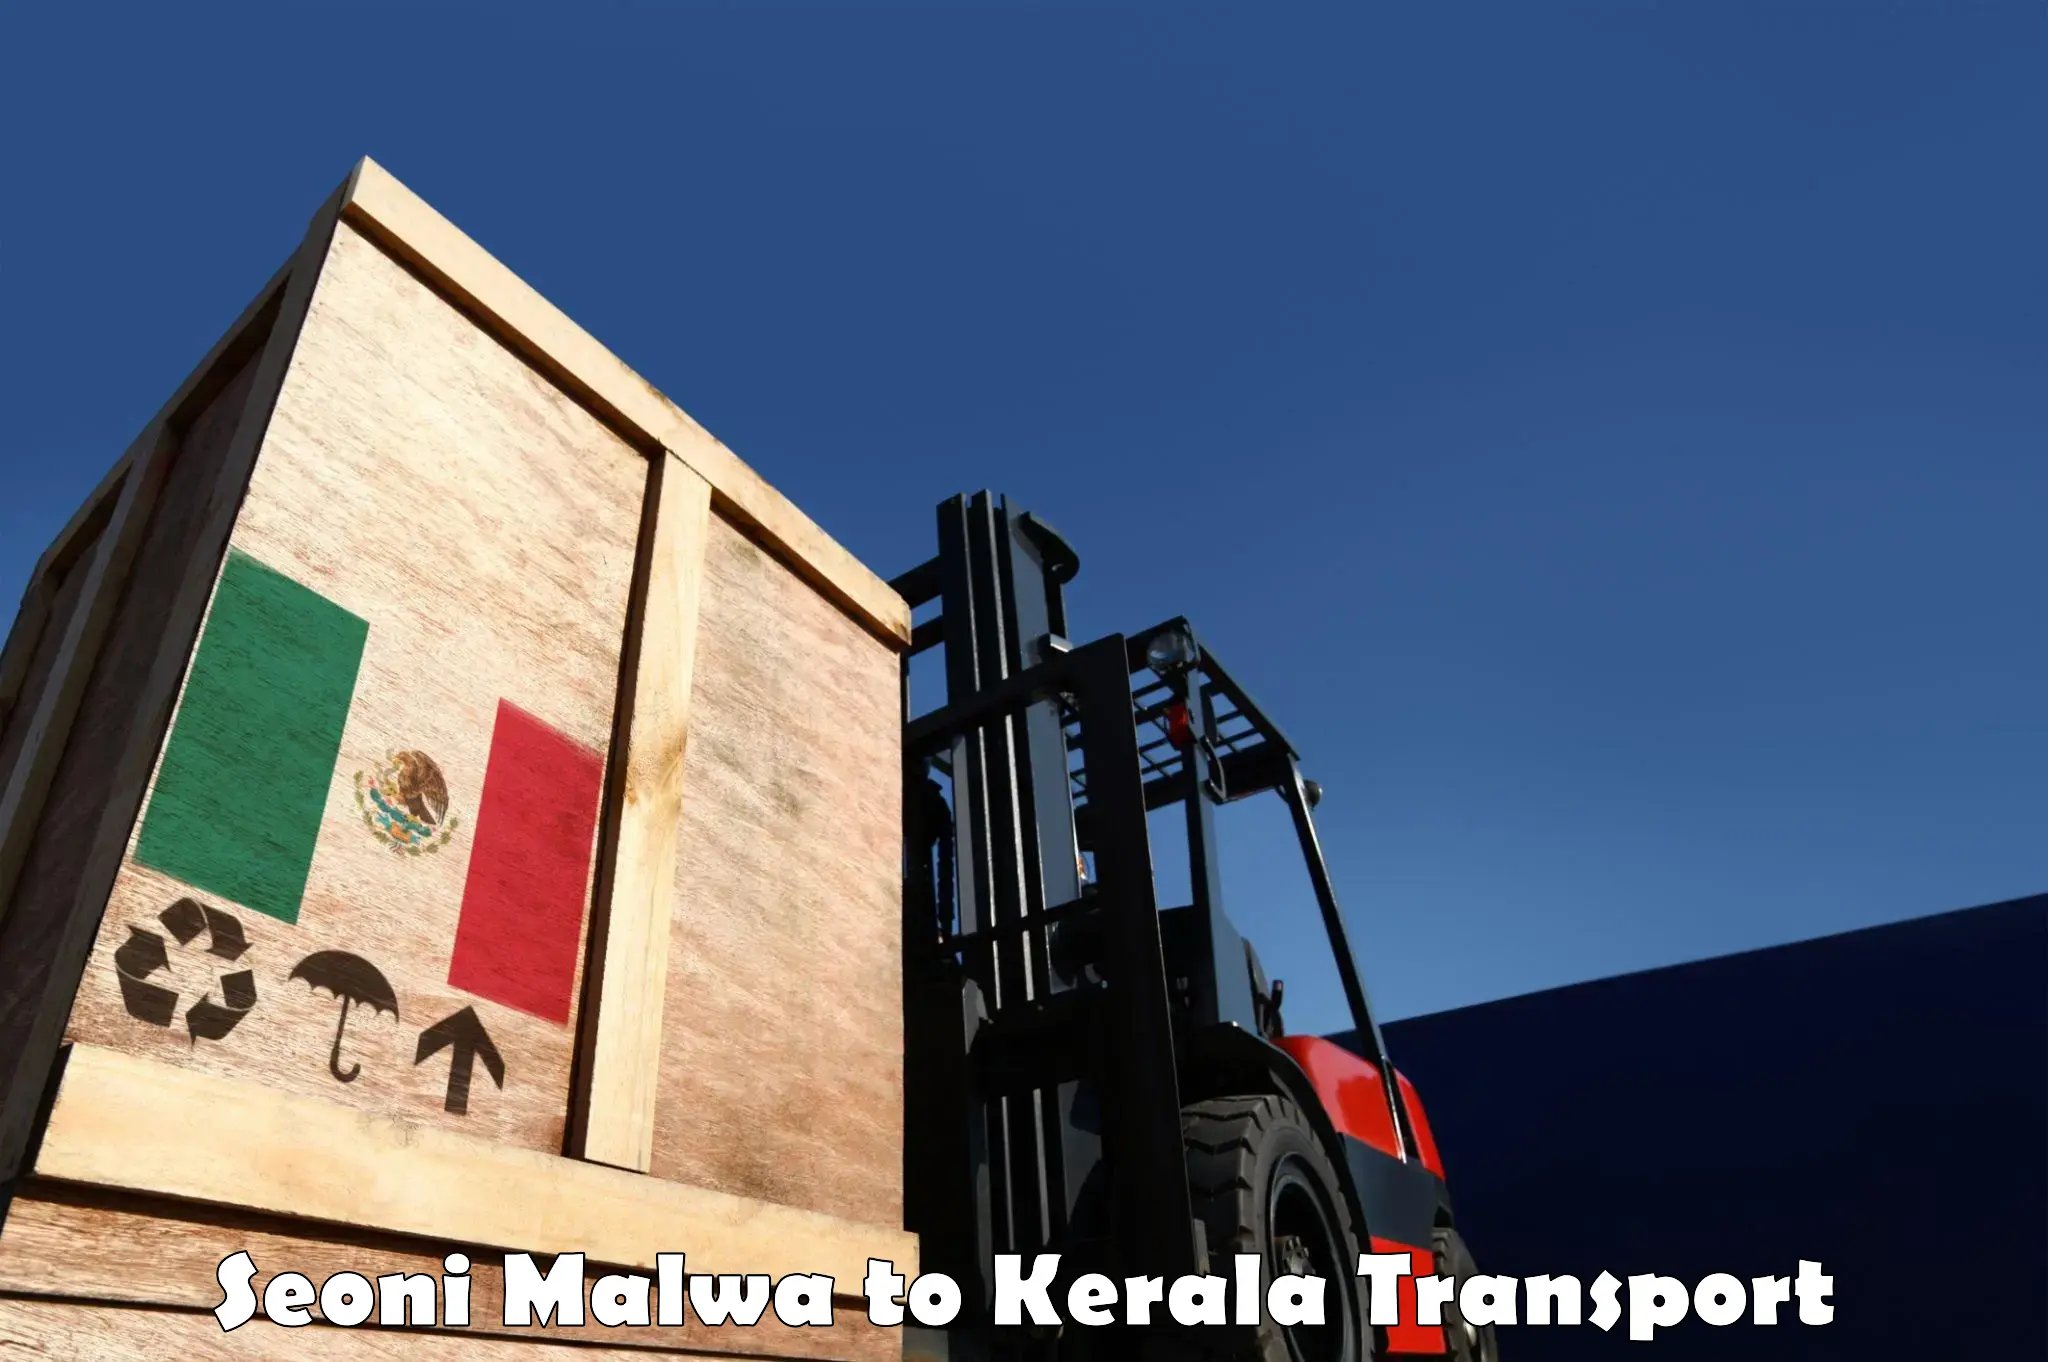 Cargo train transport services Seoni Malwa to Kannur